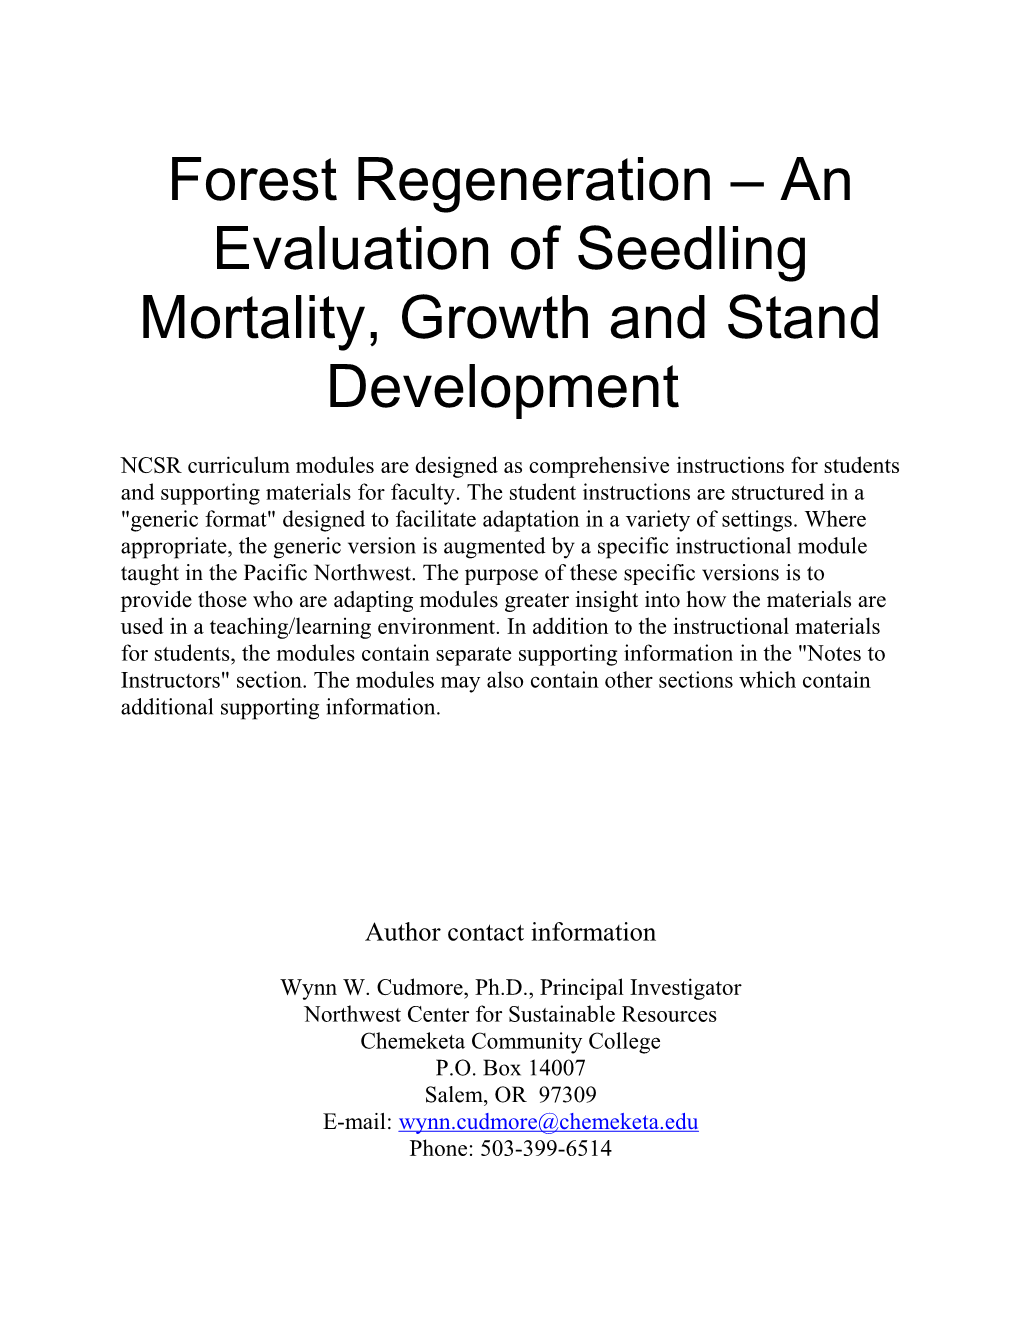 Forest Regeneration - an Evaluation of Seedling Mortality